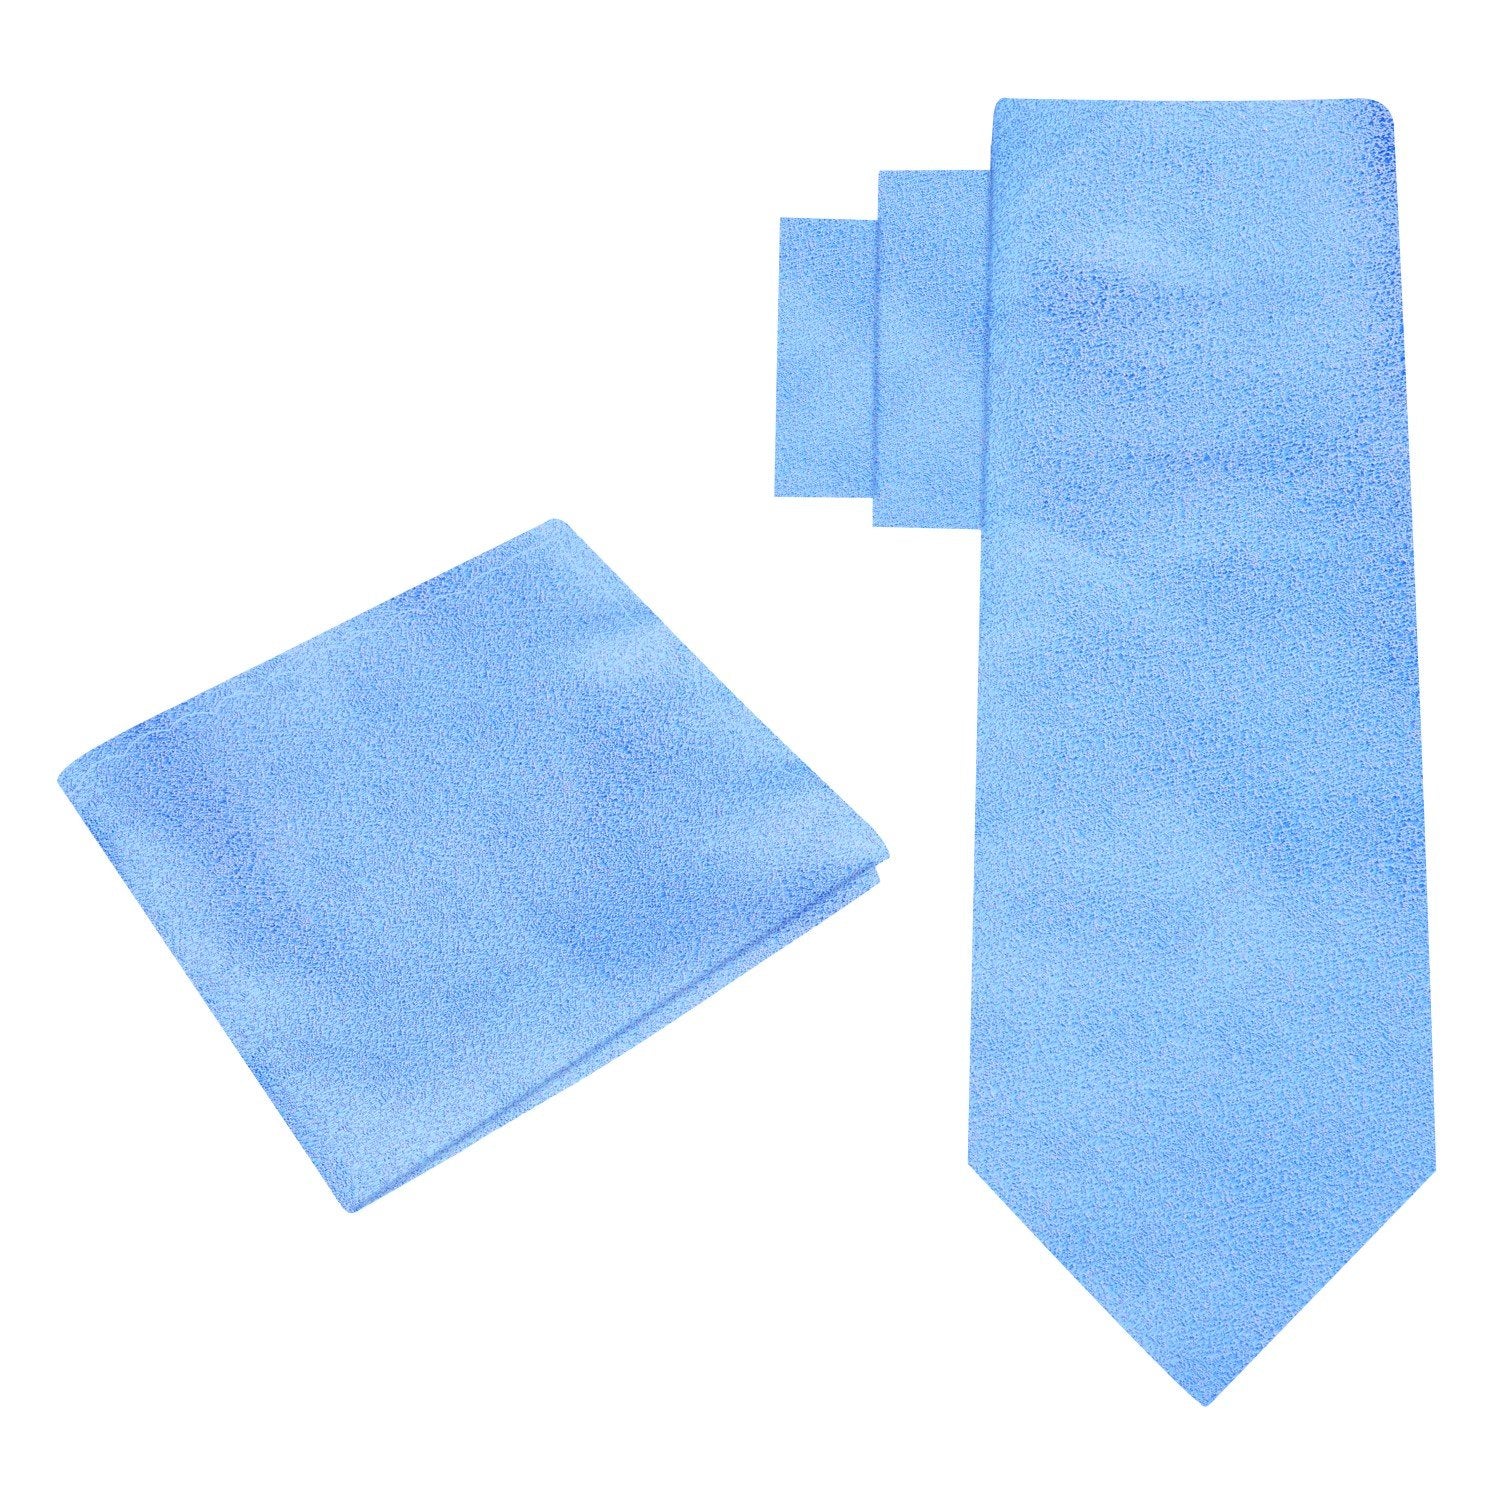 Alt View: A Solid Carolina Blue Shimmer Pattern Silk Necktie, Matching Pocket Square